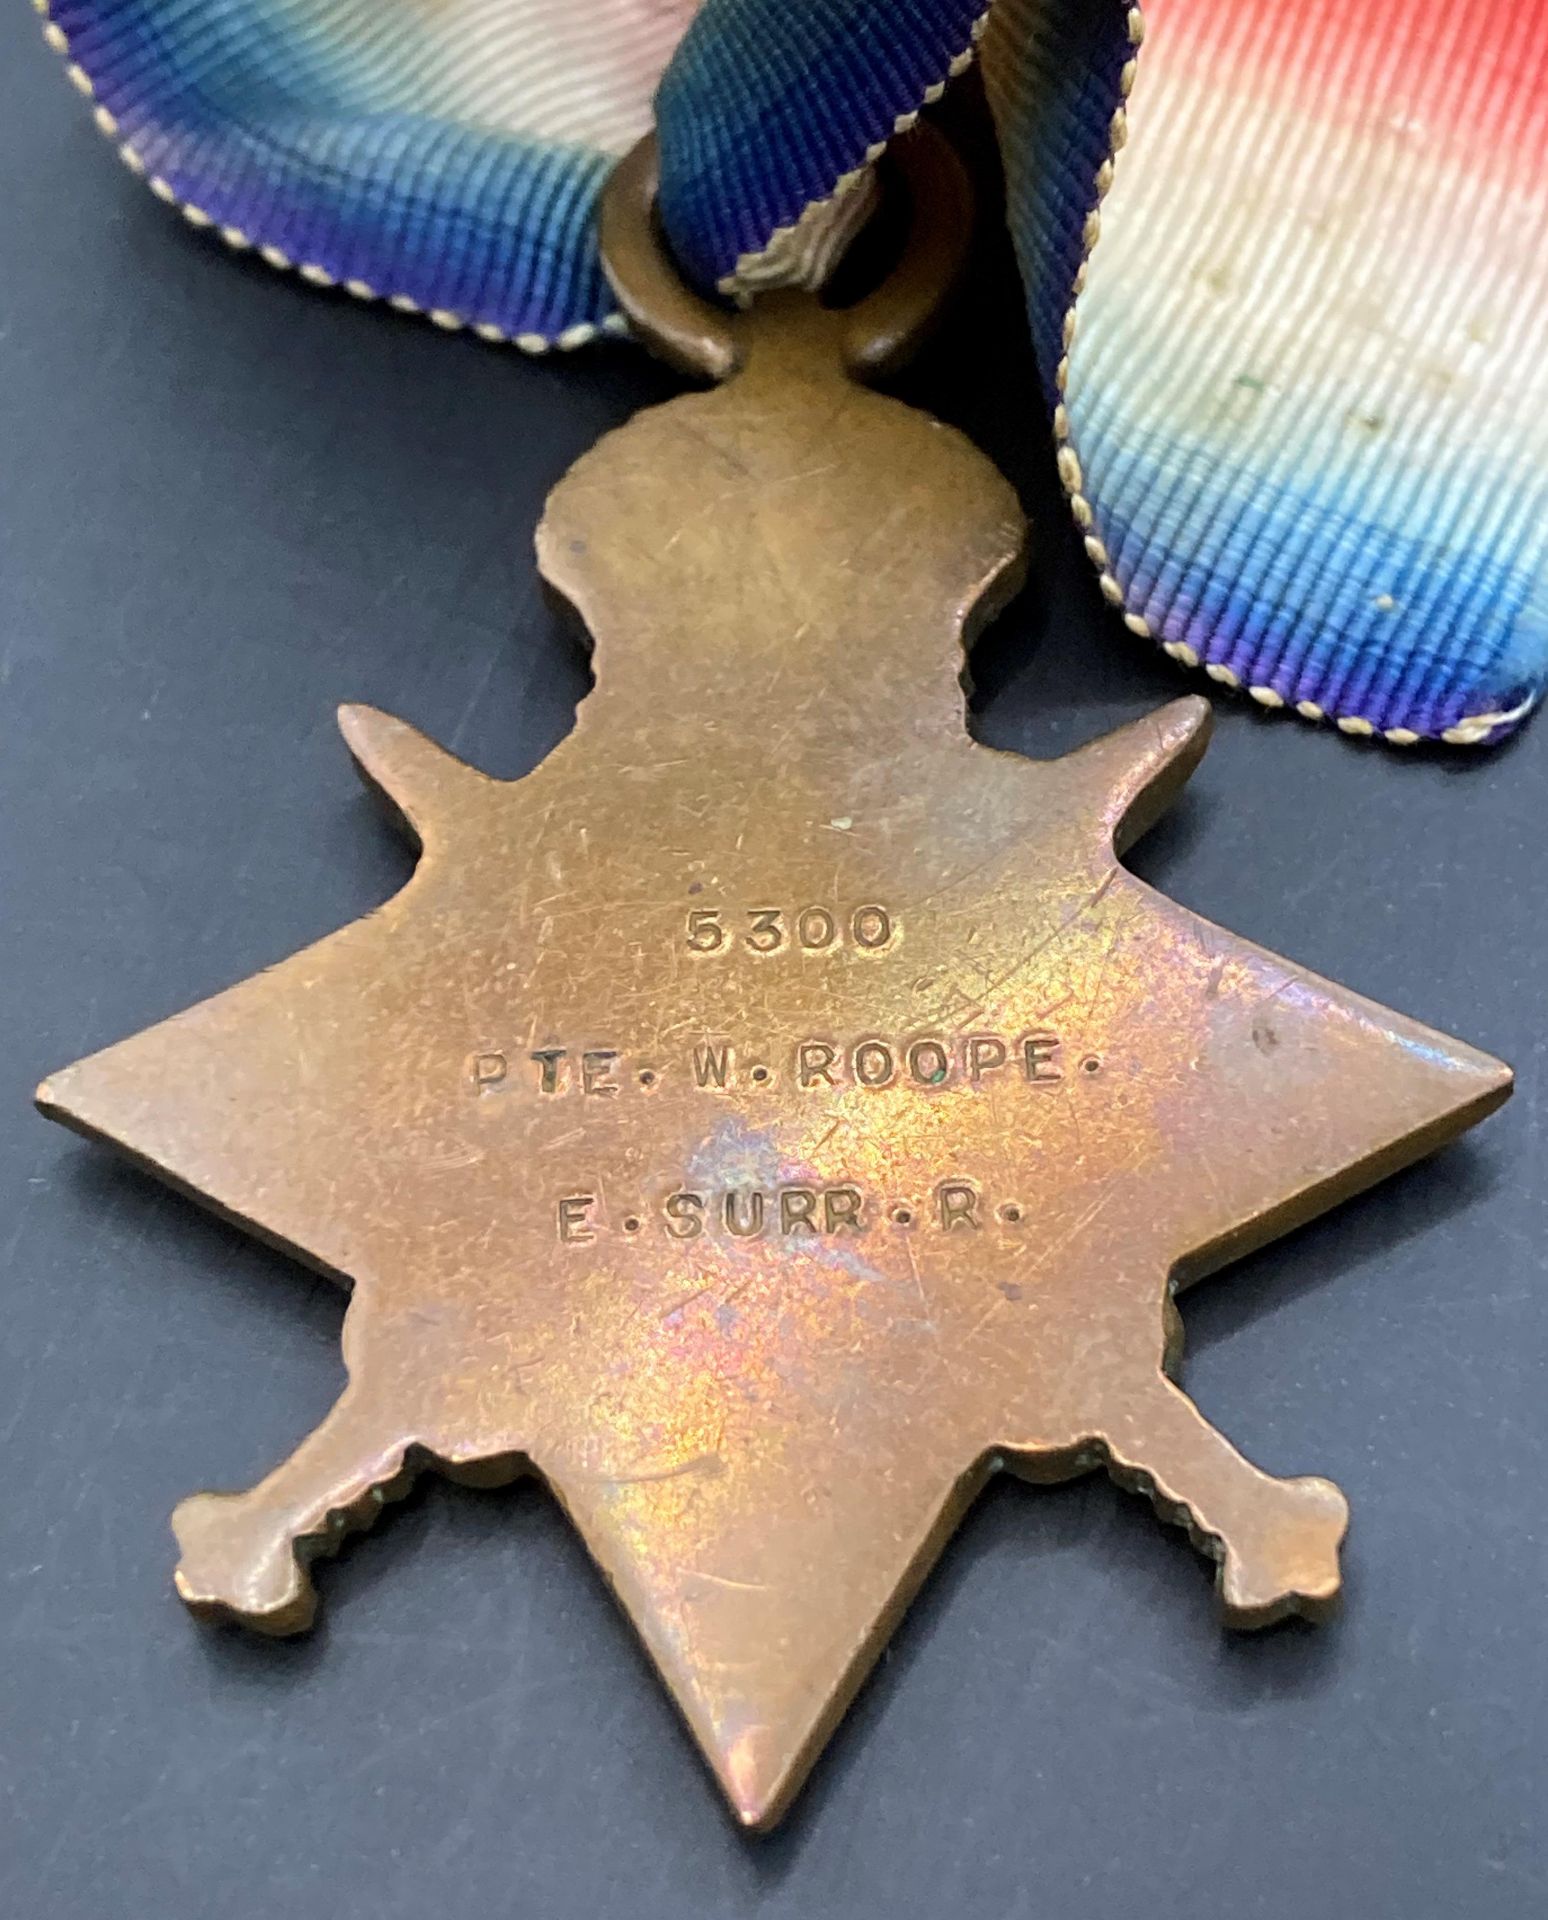 Three First World War medals - 1914-1915 Star, - Image 2 of 5